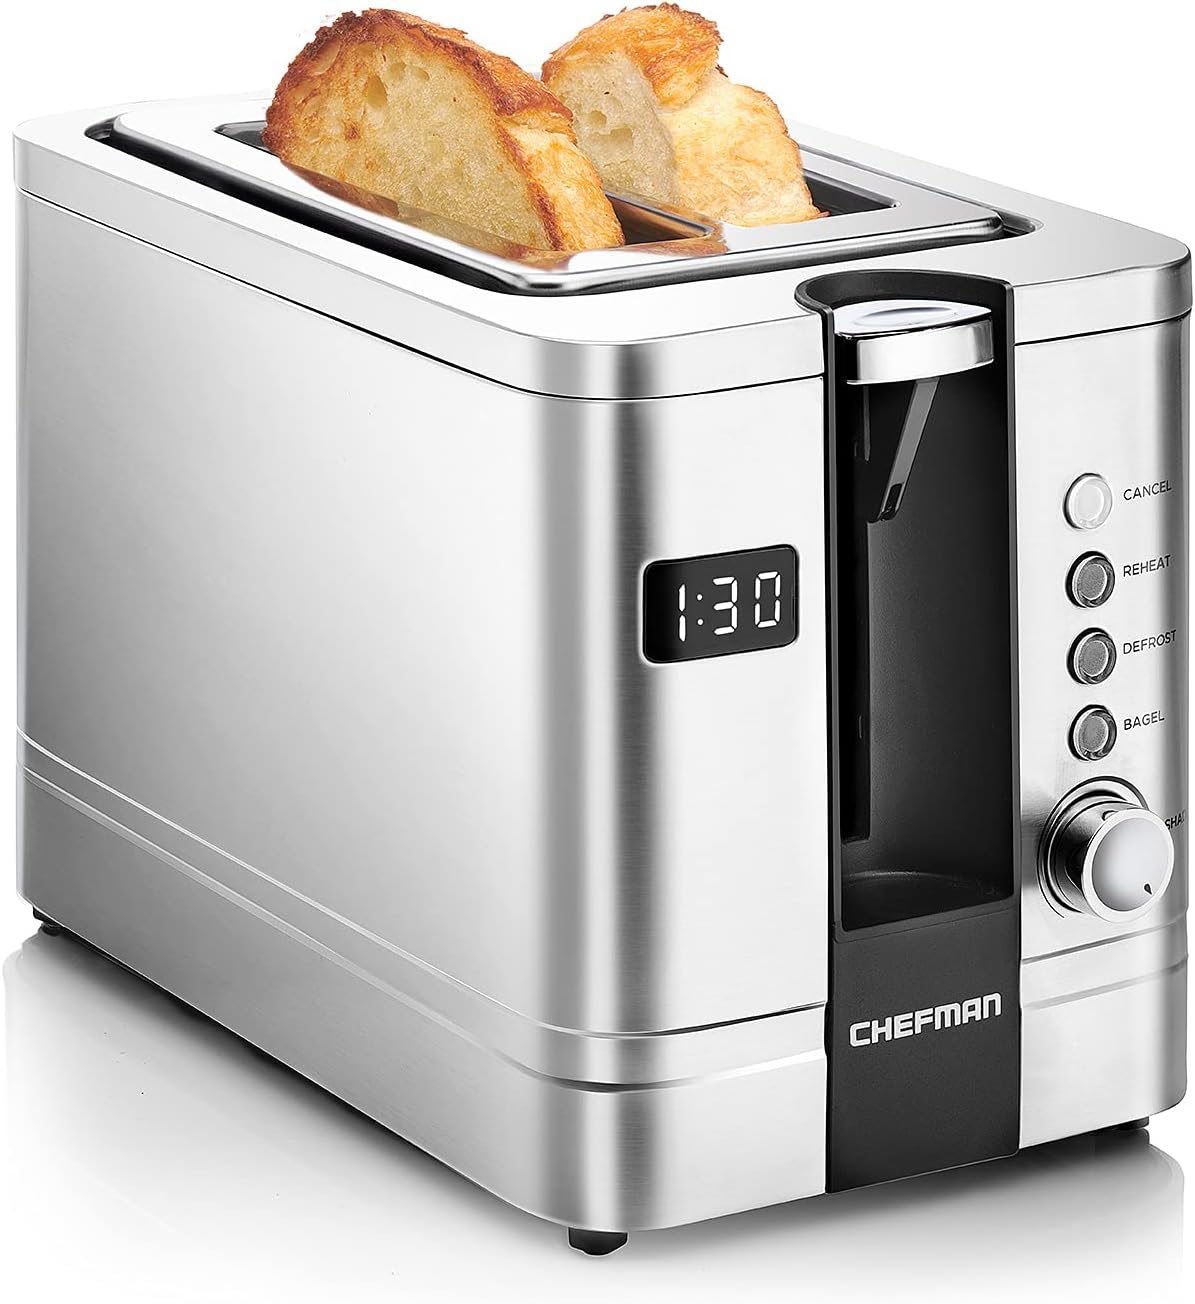 2-Slice Chefman Digital Pop-Up Toaster w/ Removable Crumb Tray (Stainless Steel) $13.89 @ Amazon & Walmart